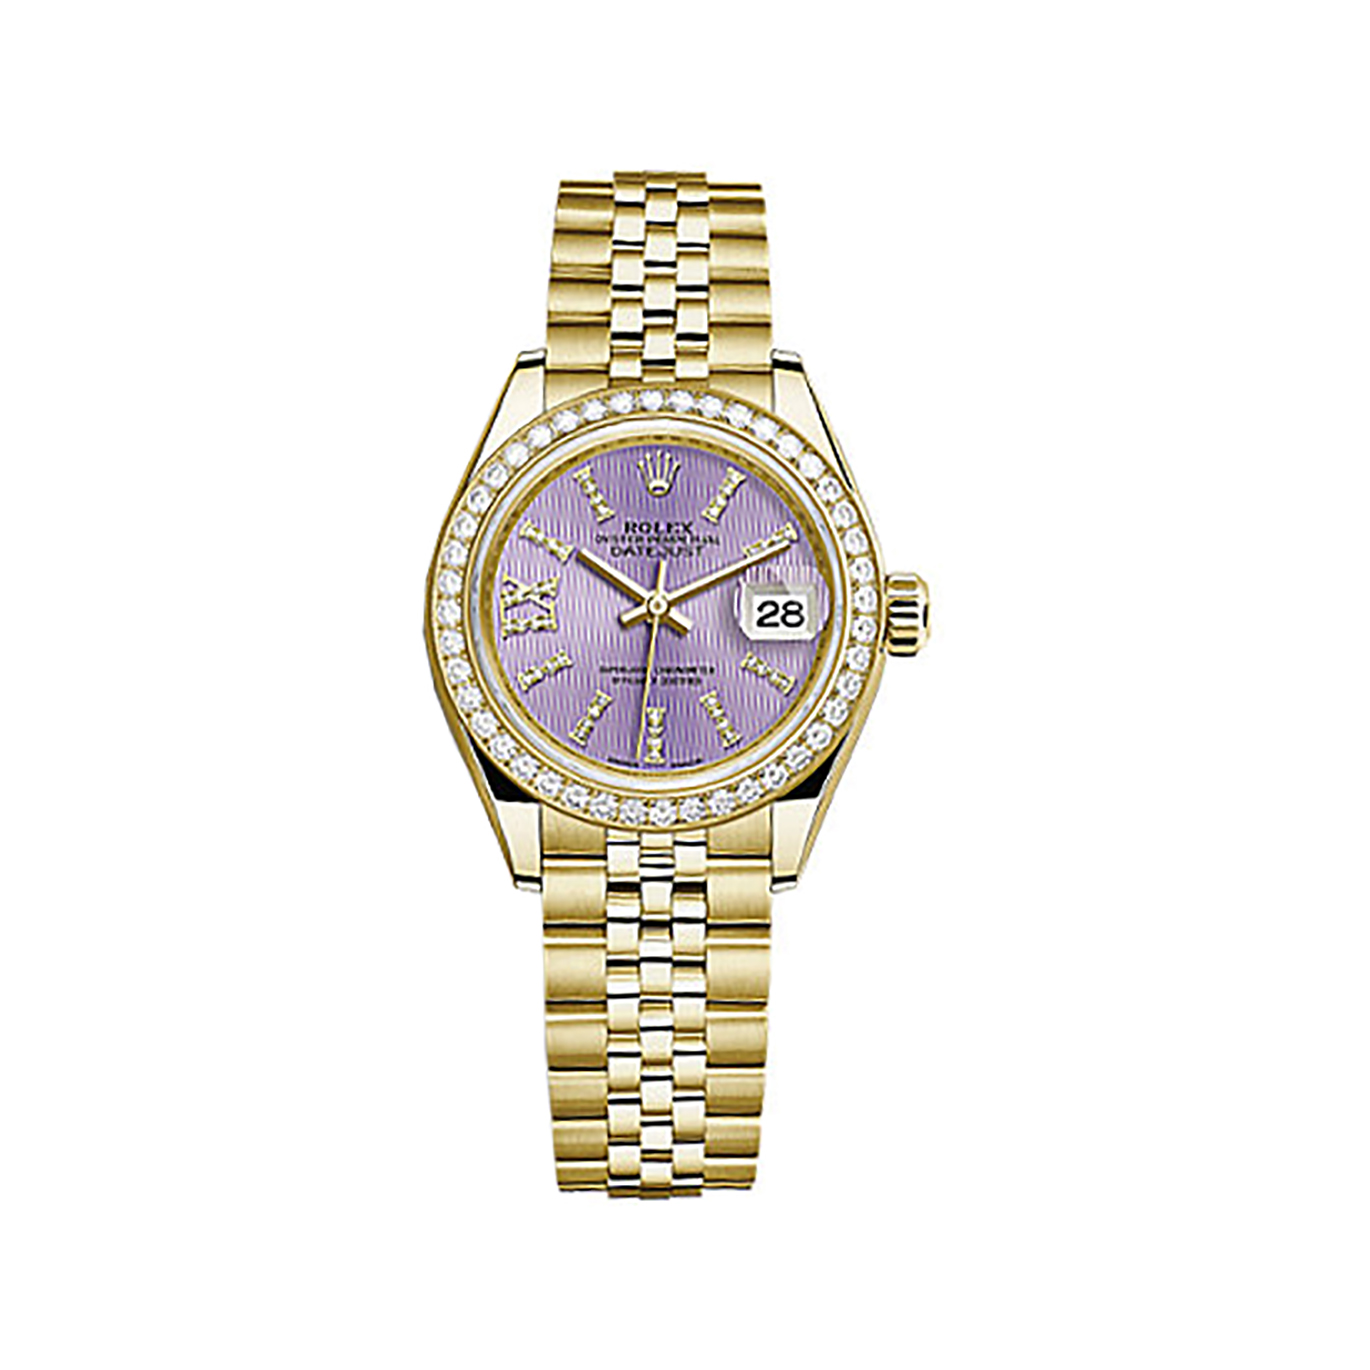 Lady-Datejust 28 279138RBR Gold & Diamonds Watch (Lilac Set with Diamonds) - Click Image to Close